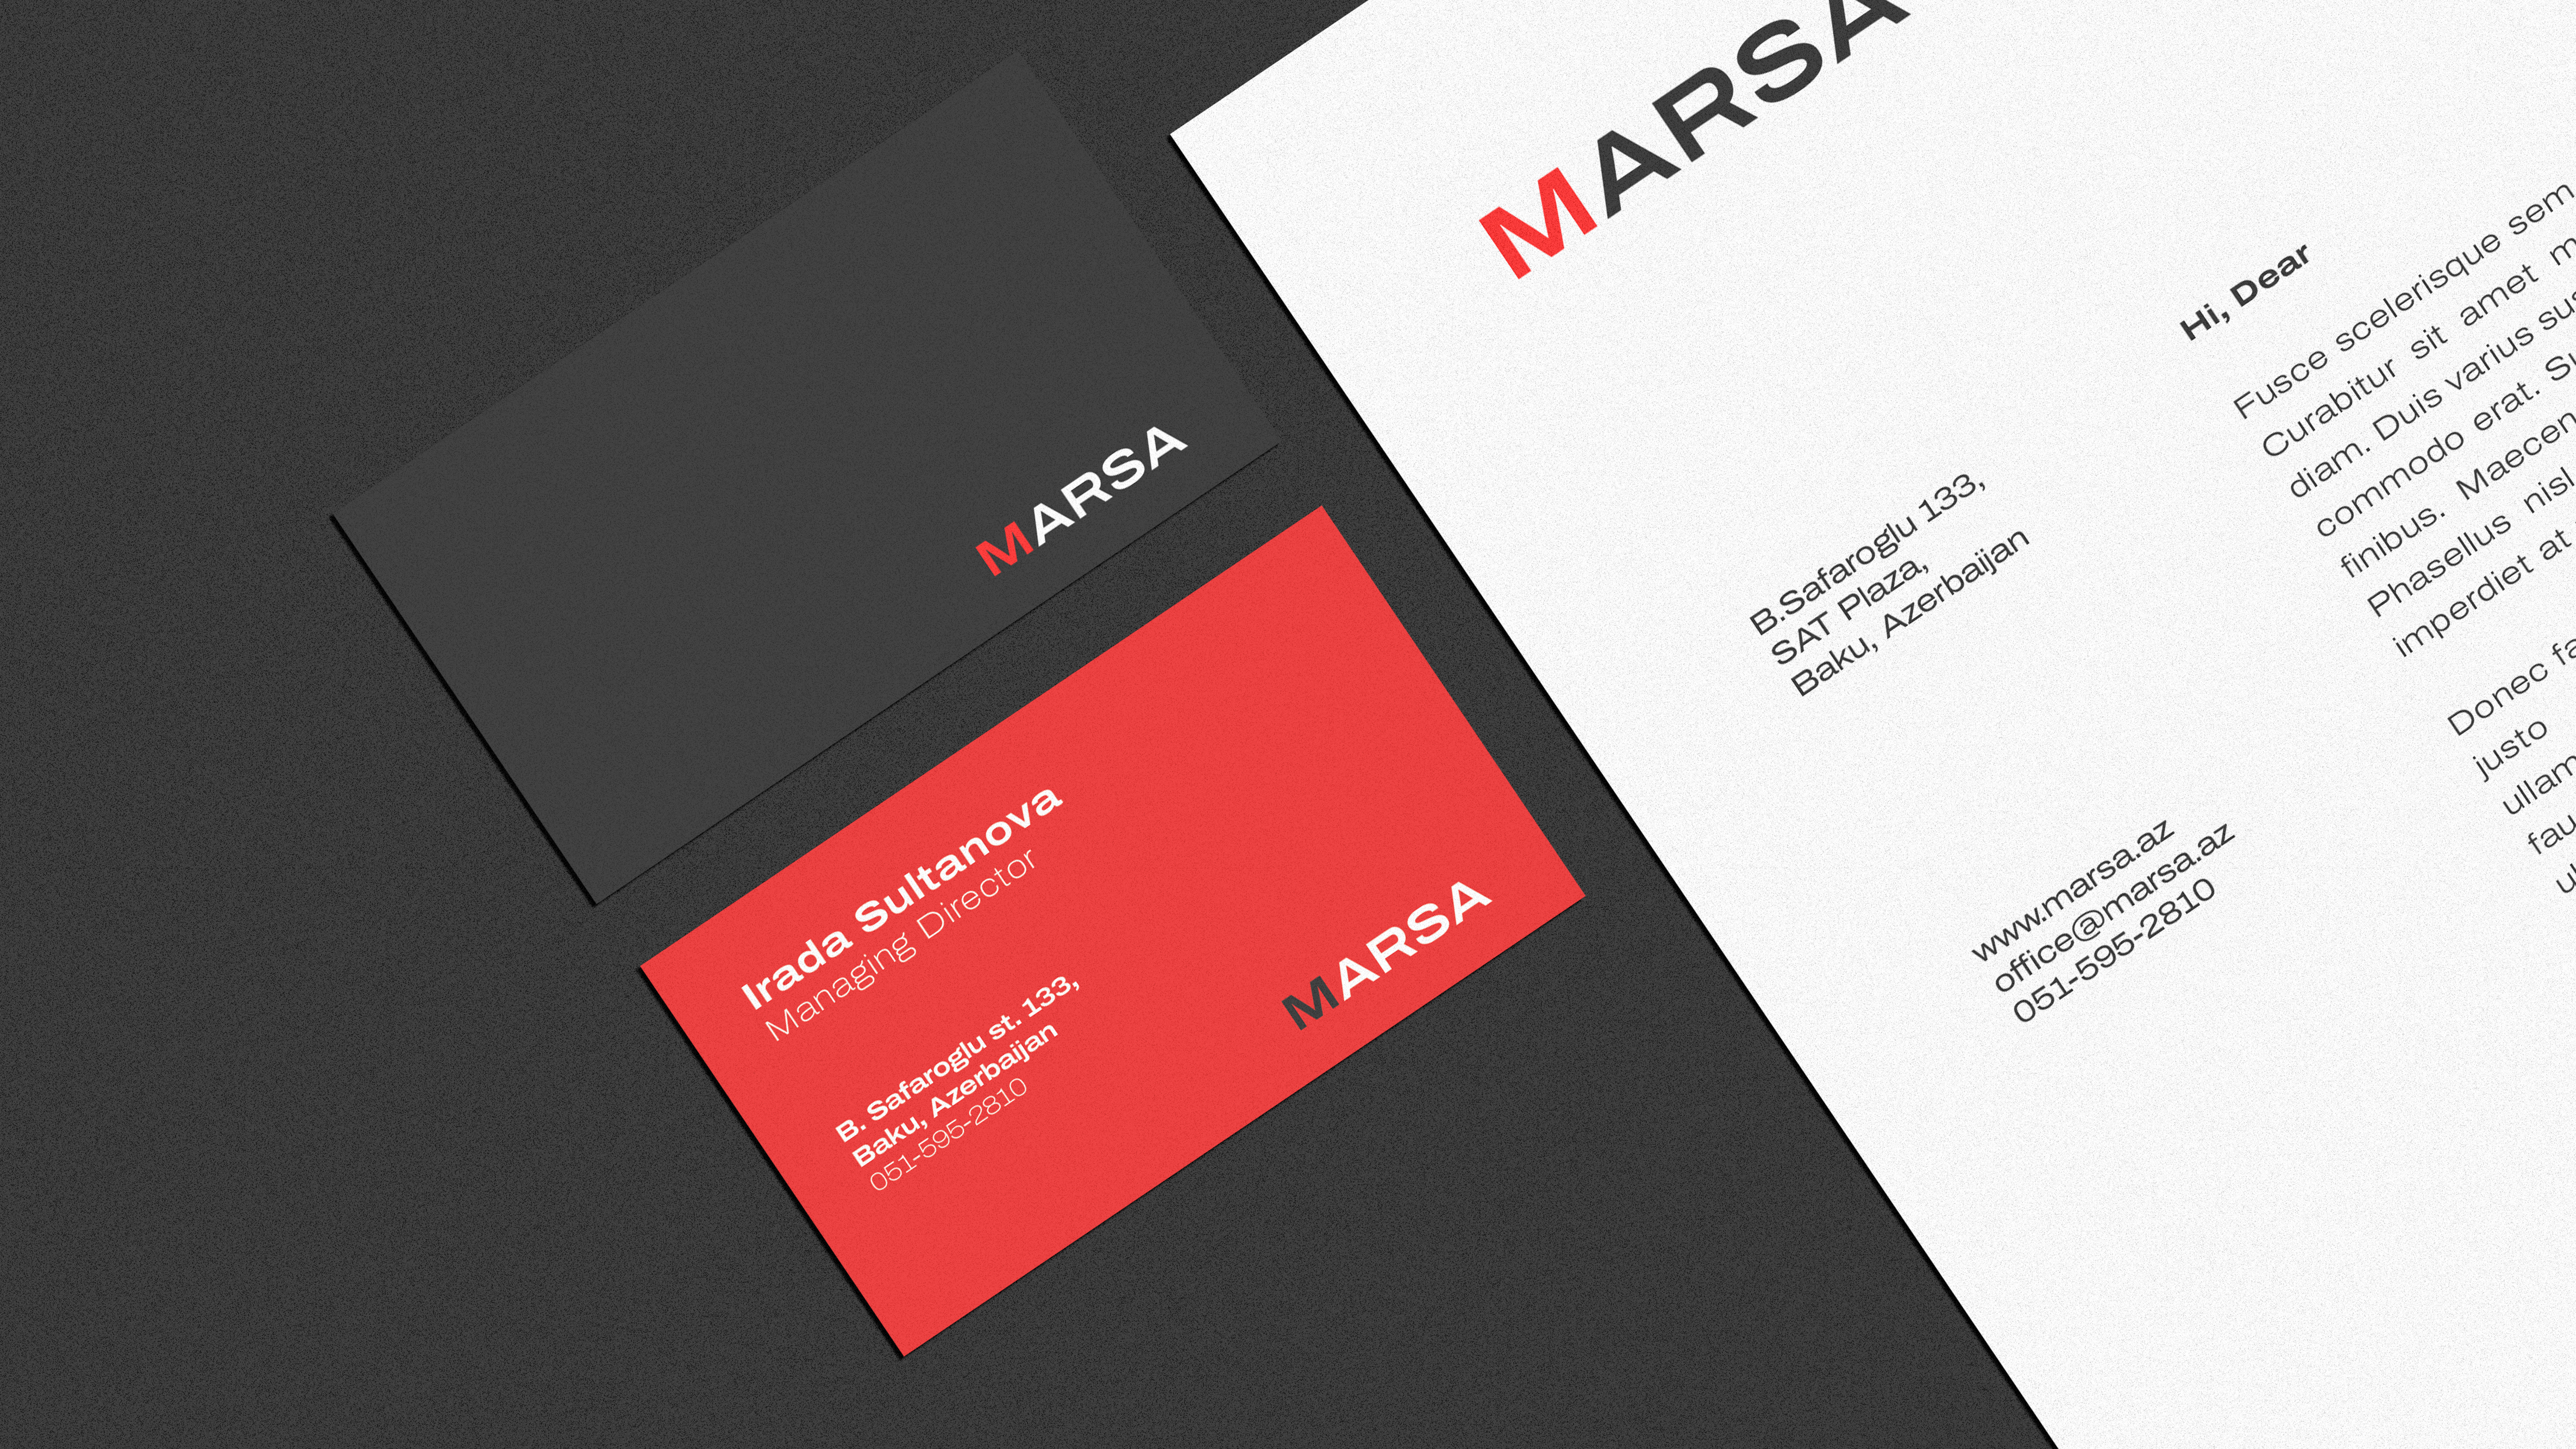 Marsa - Brand Identity Design